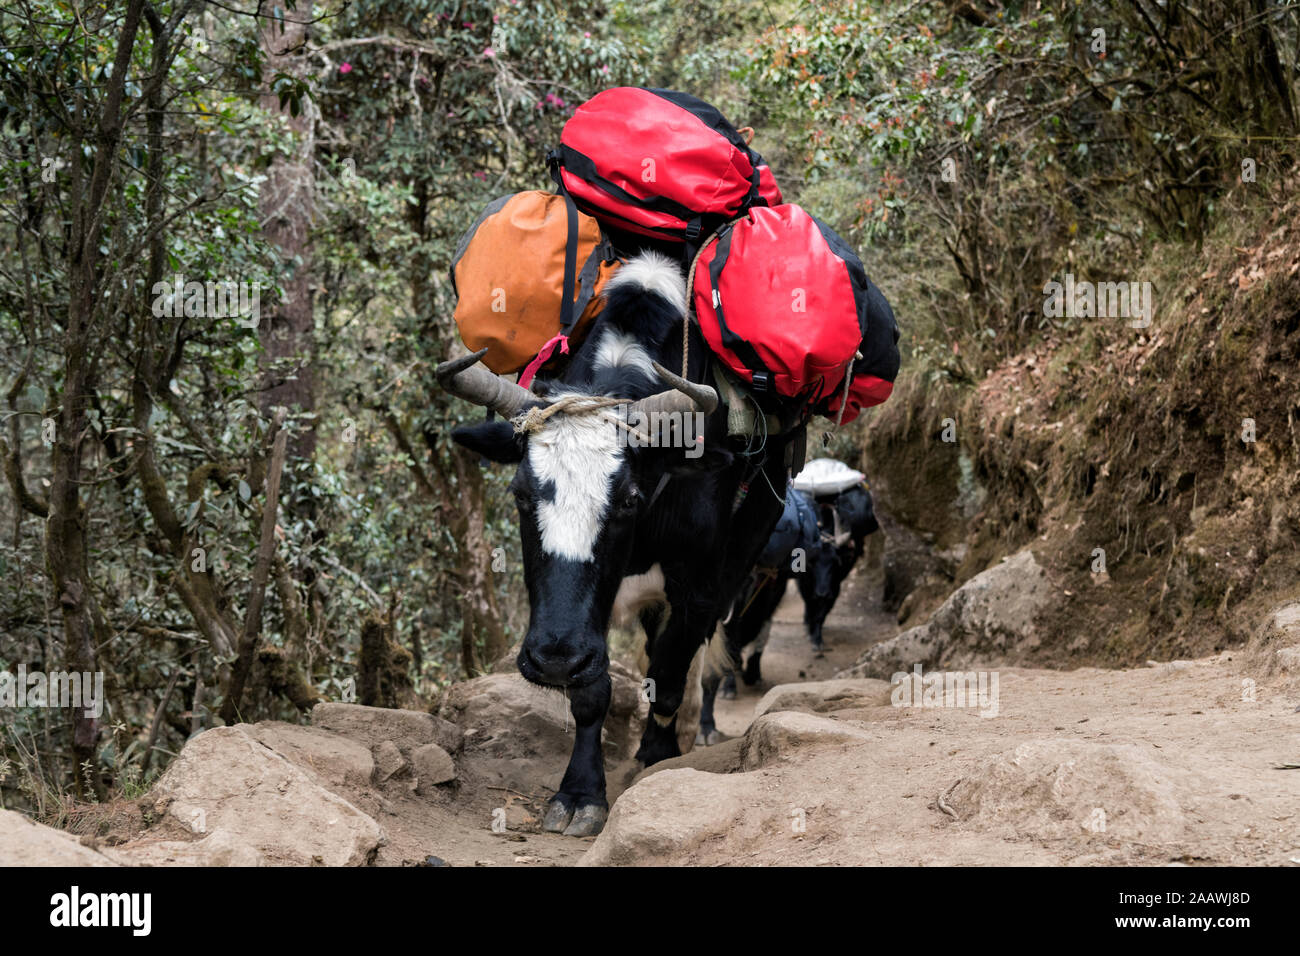 Packed cattle carrying luggage, Solo Khumbu, Nepal Stock Photo